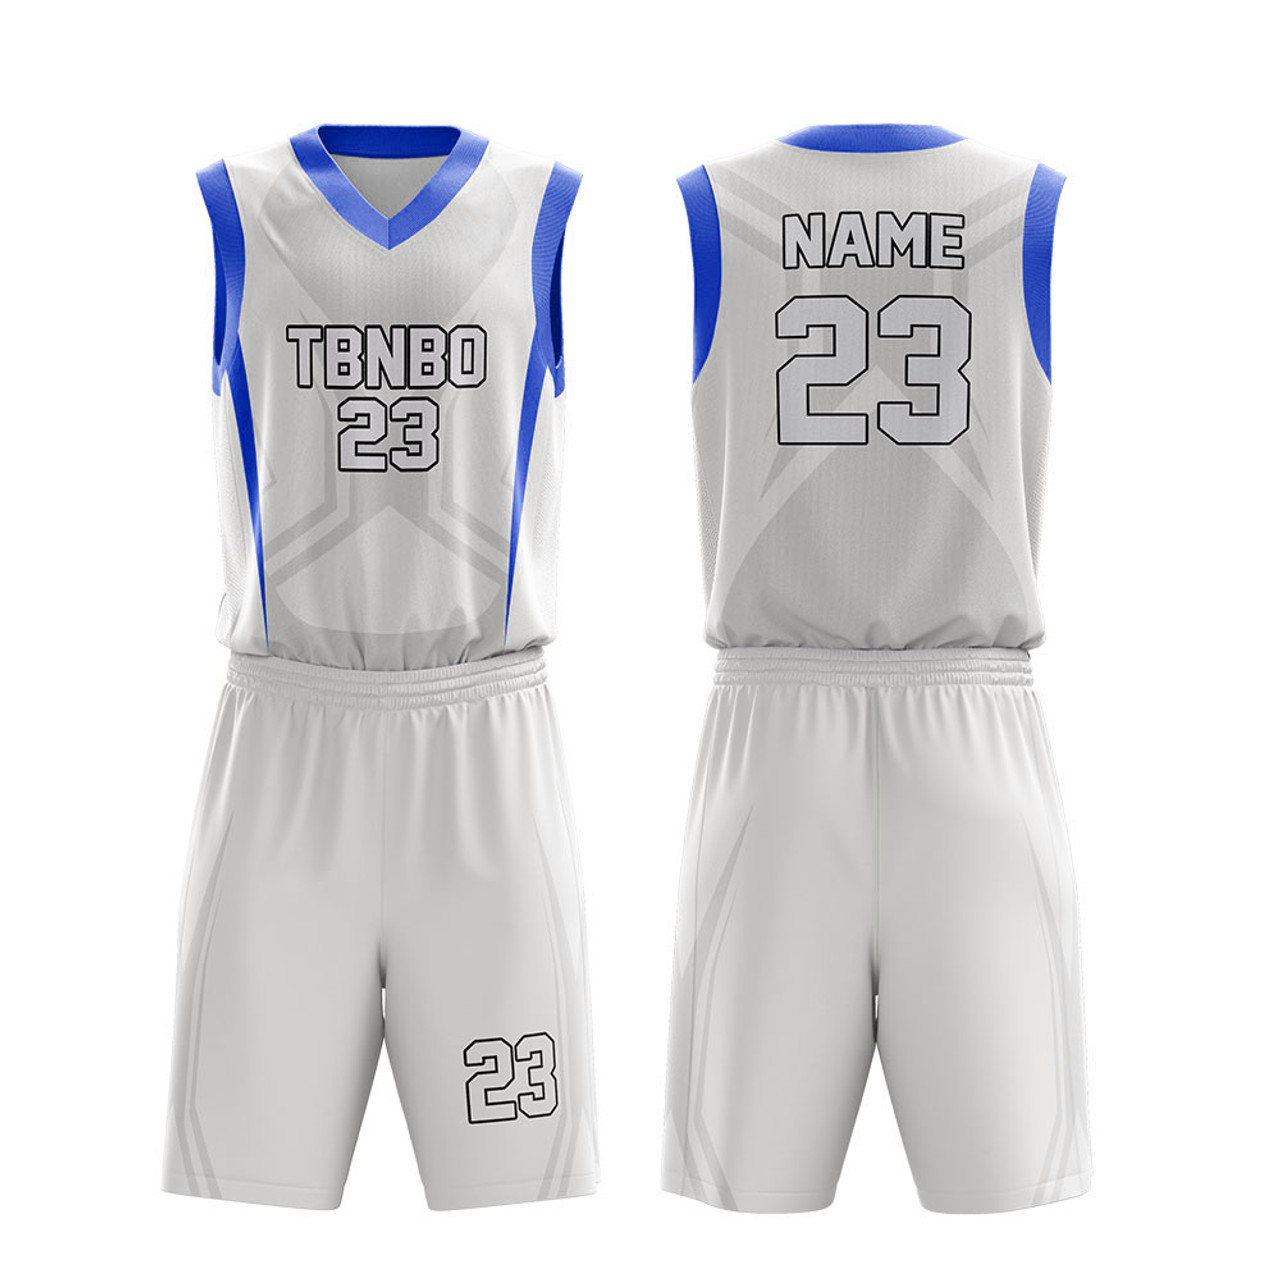 Sports jersey design, Basketball jersey outfit, Basketball jersey